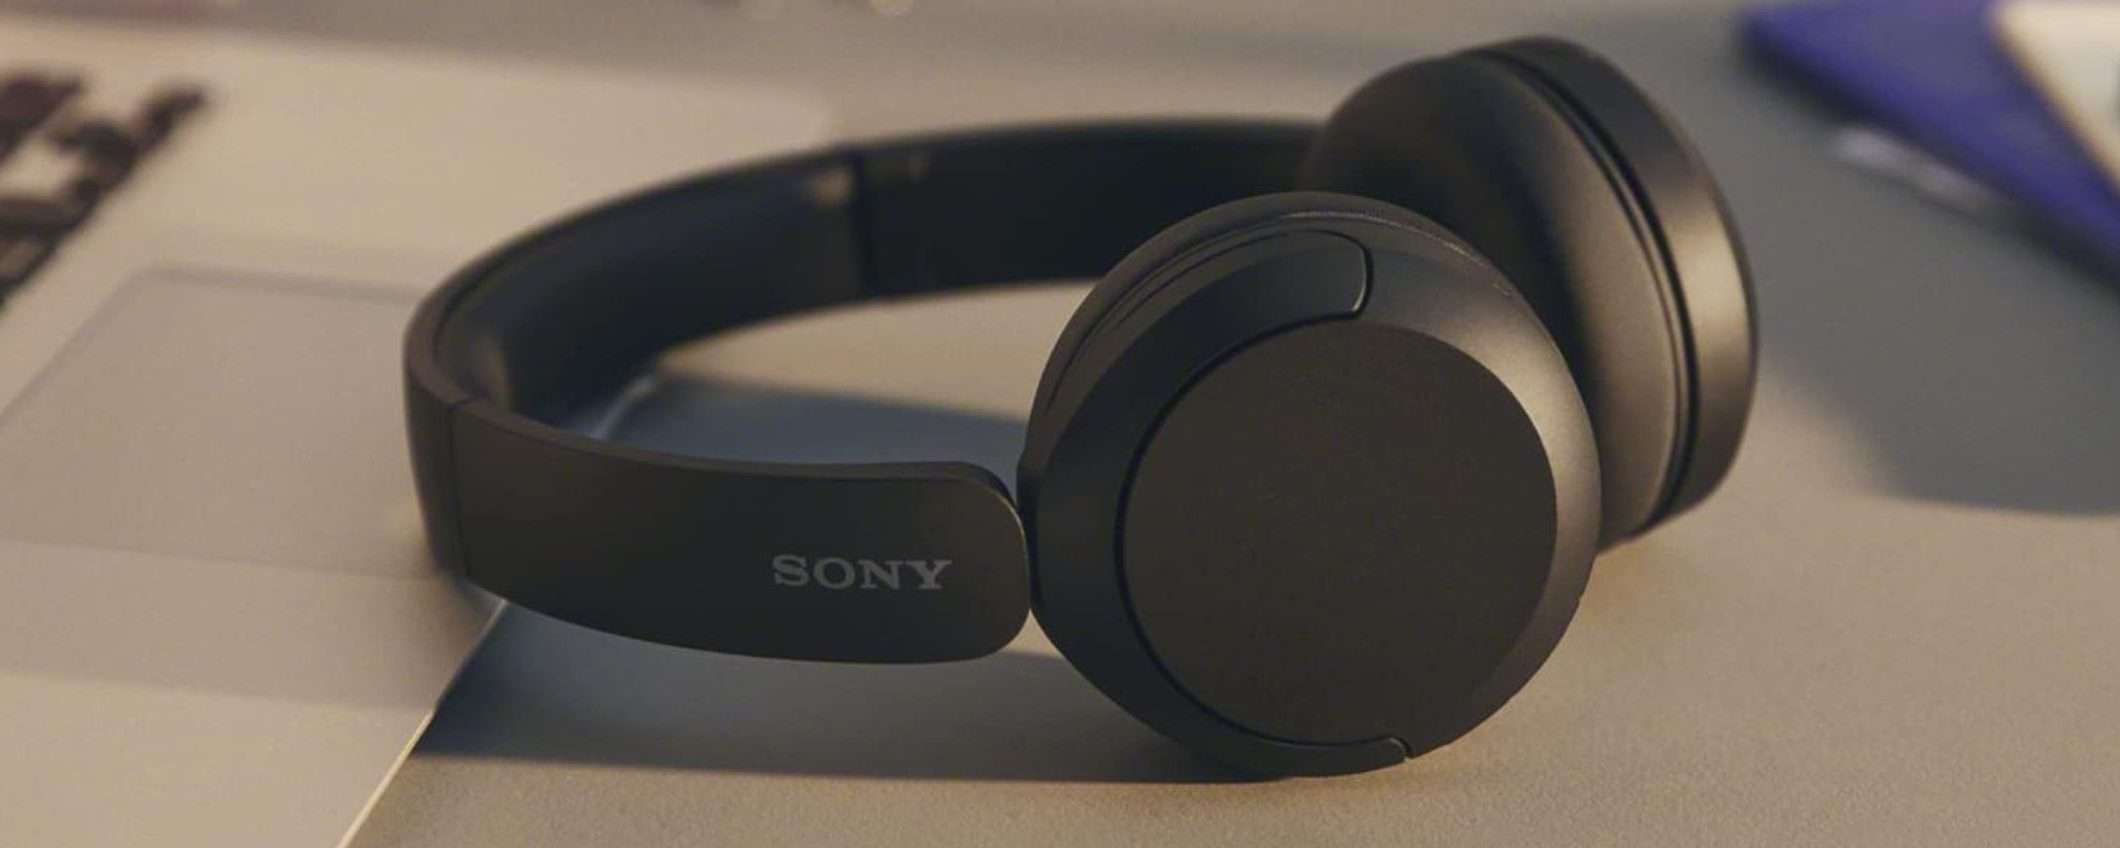 Sony SHOCK su Amazon: cuffie wireless SENSAZIONALI a 39,99€ (-43%)